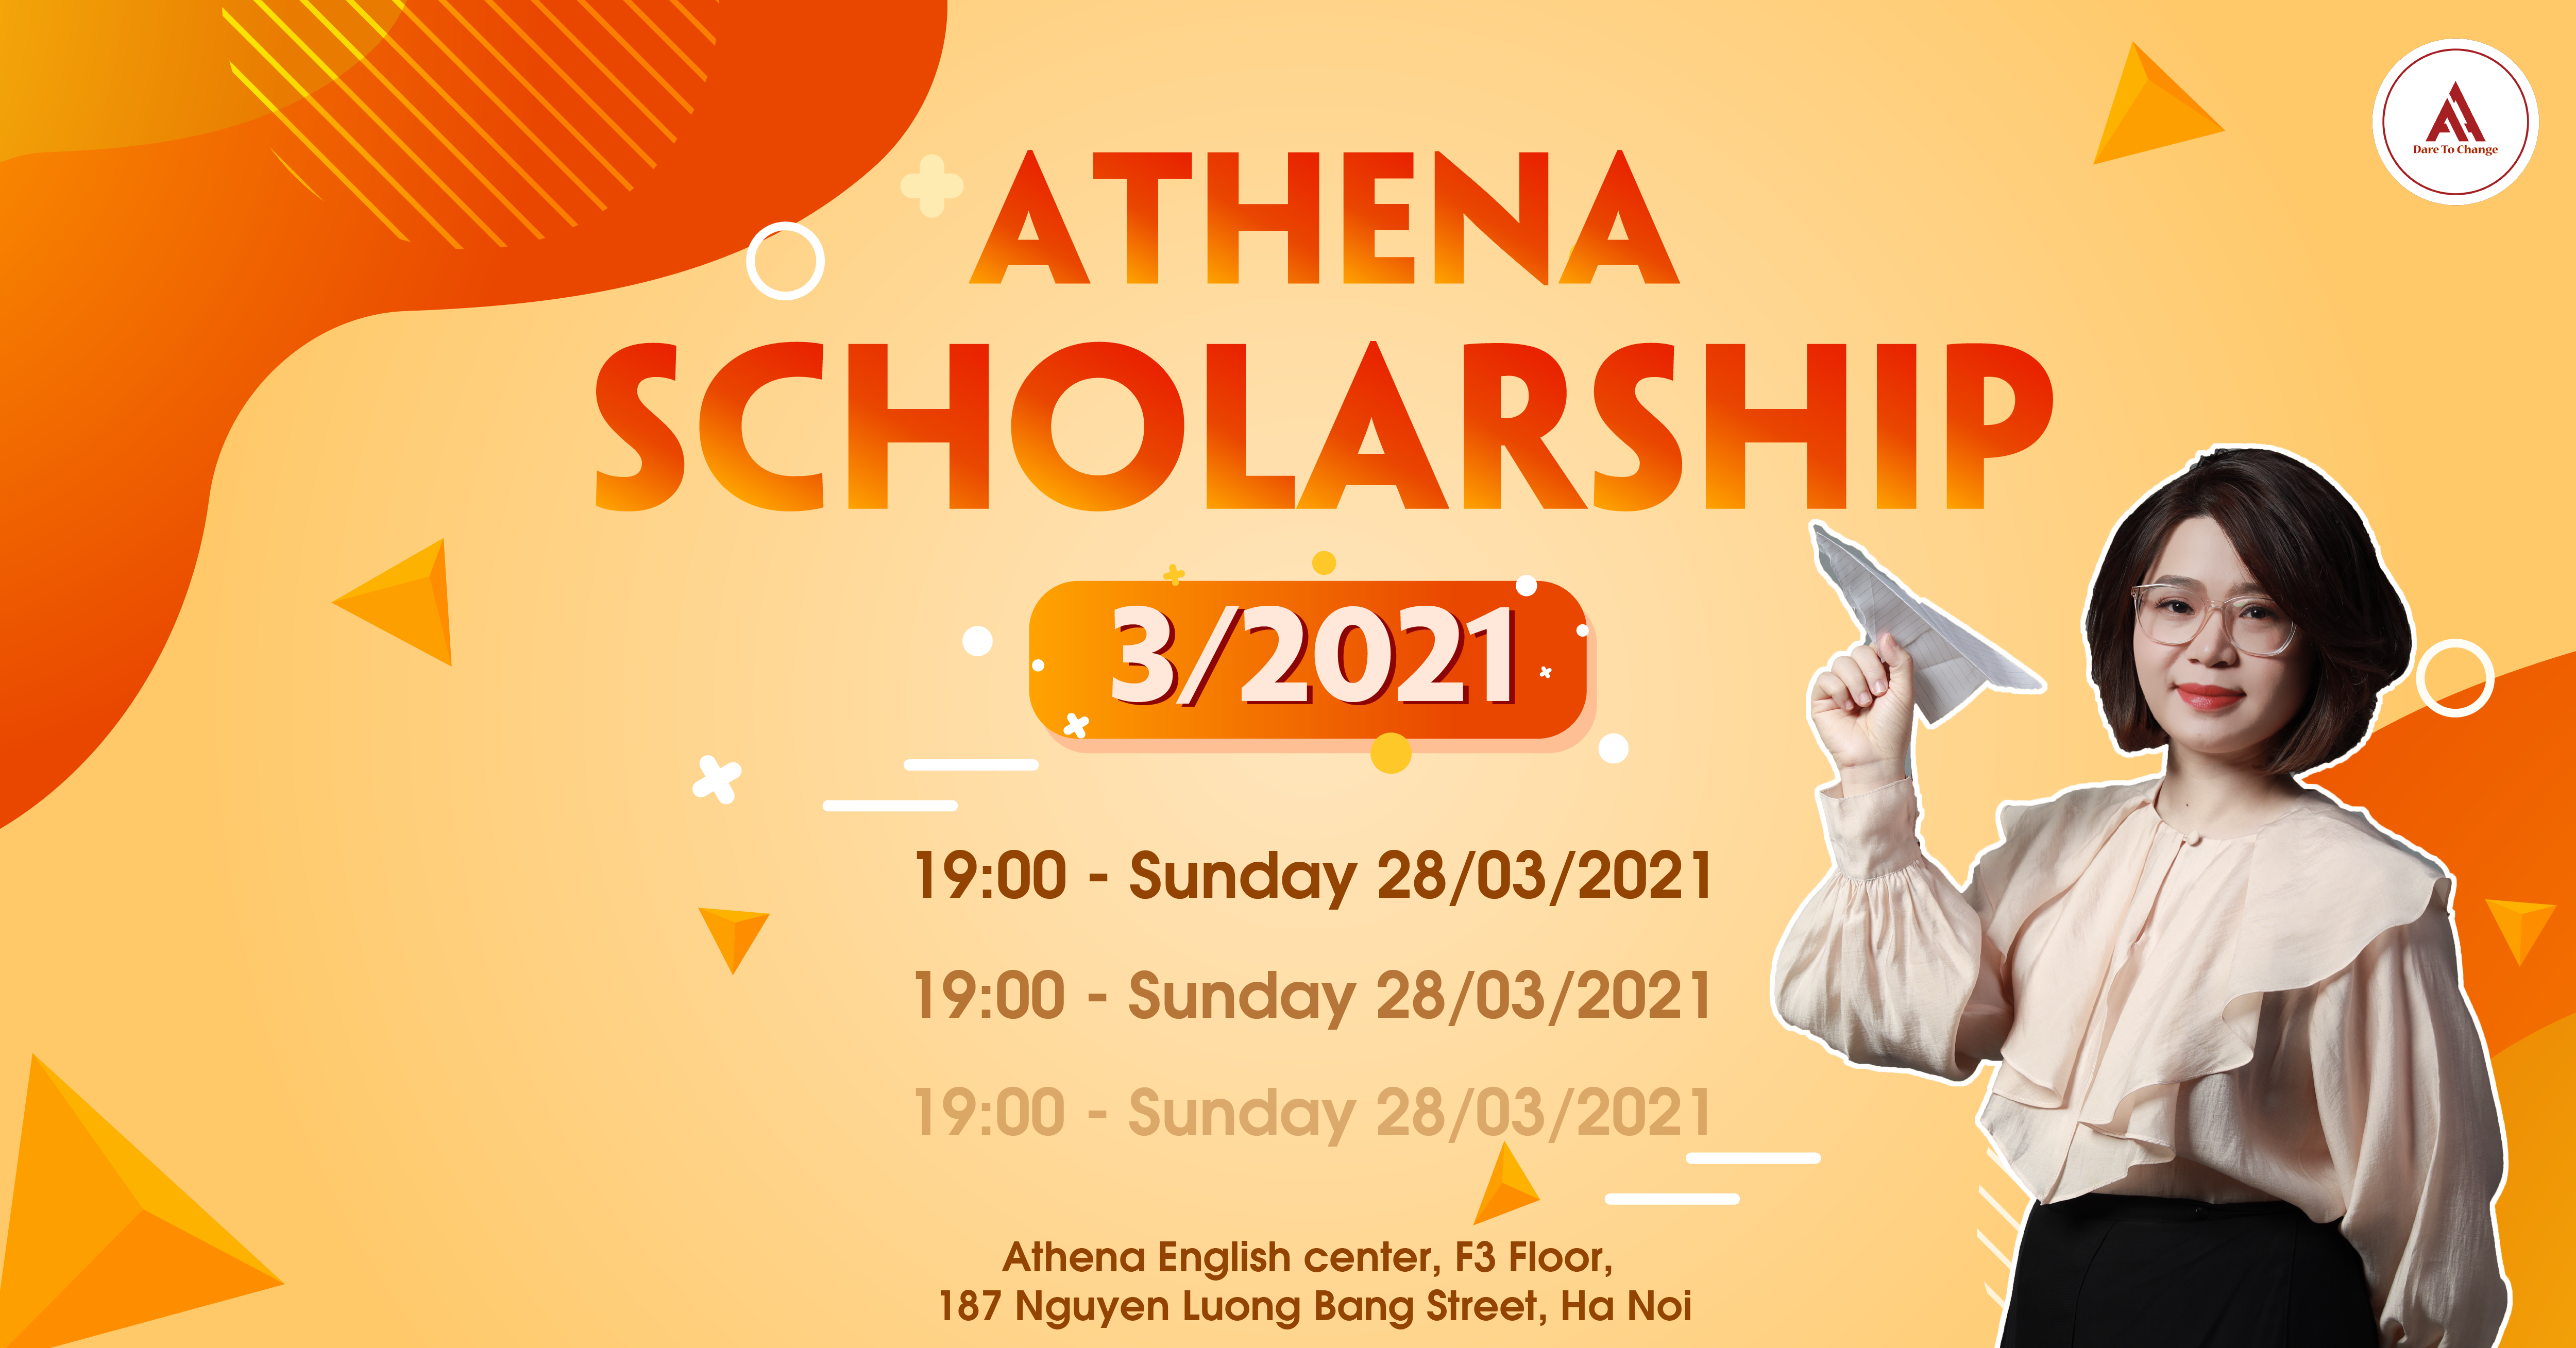 ATHENA SCHOLARSHIP 3/2021 - COMMING SOON